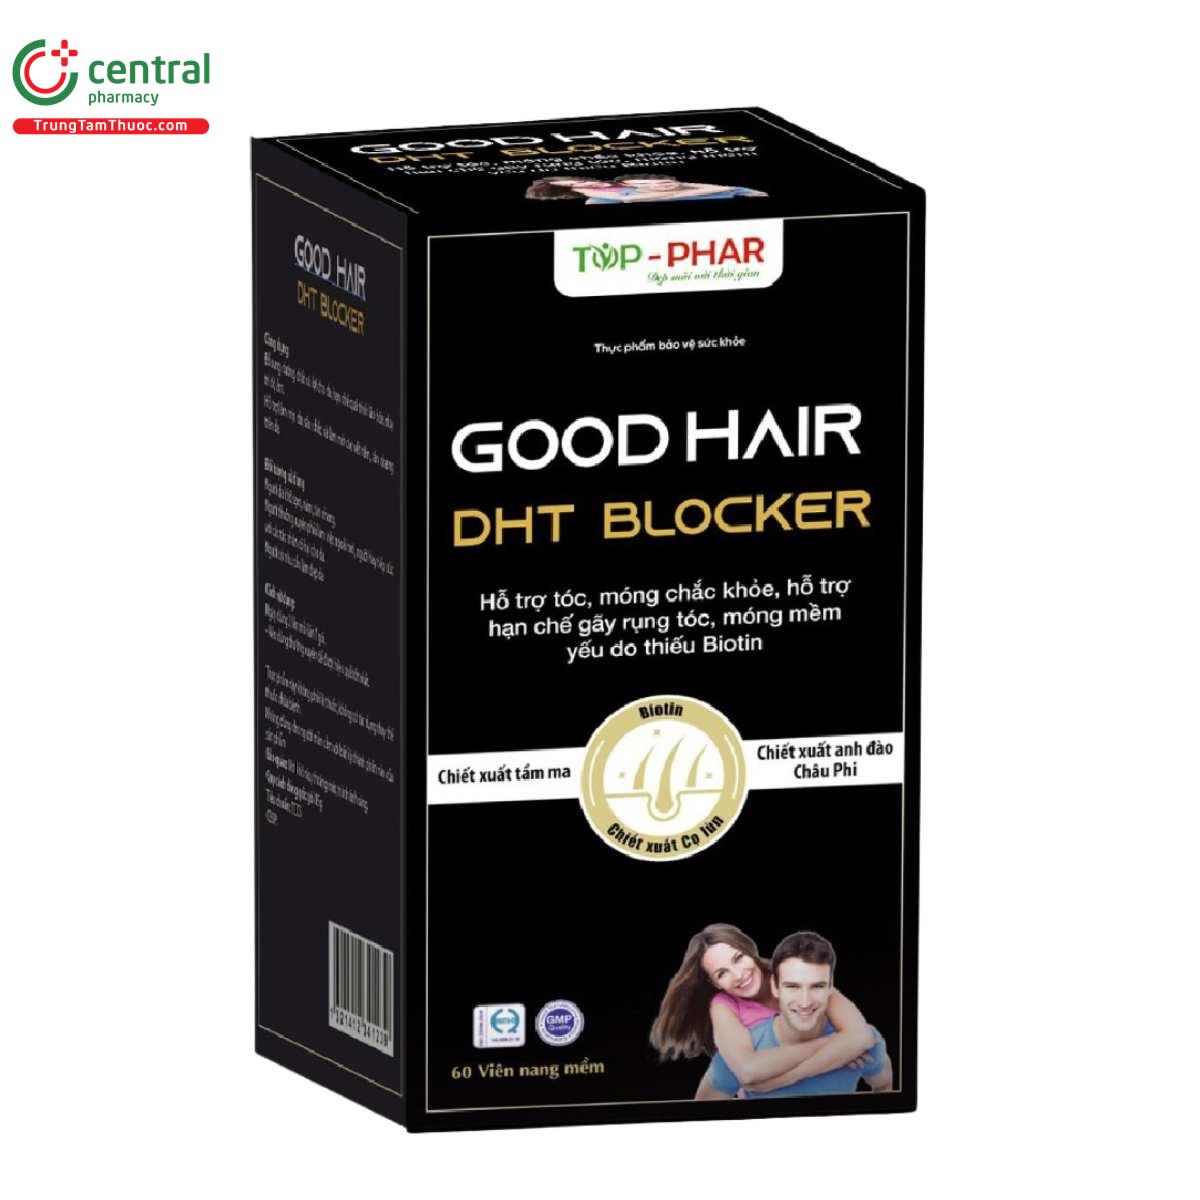 good hair dht blocker 3 P6828